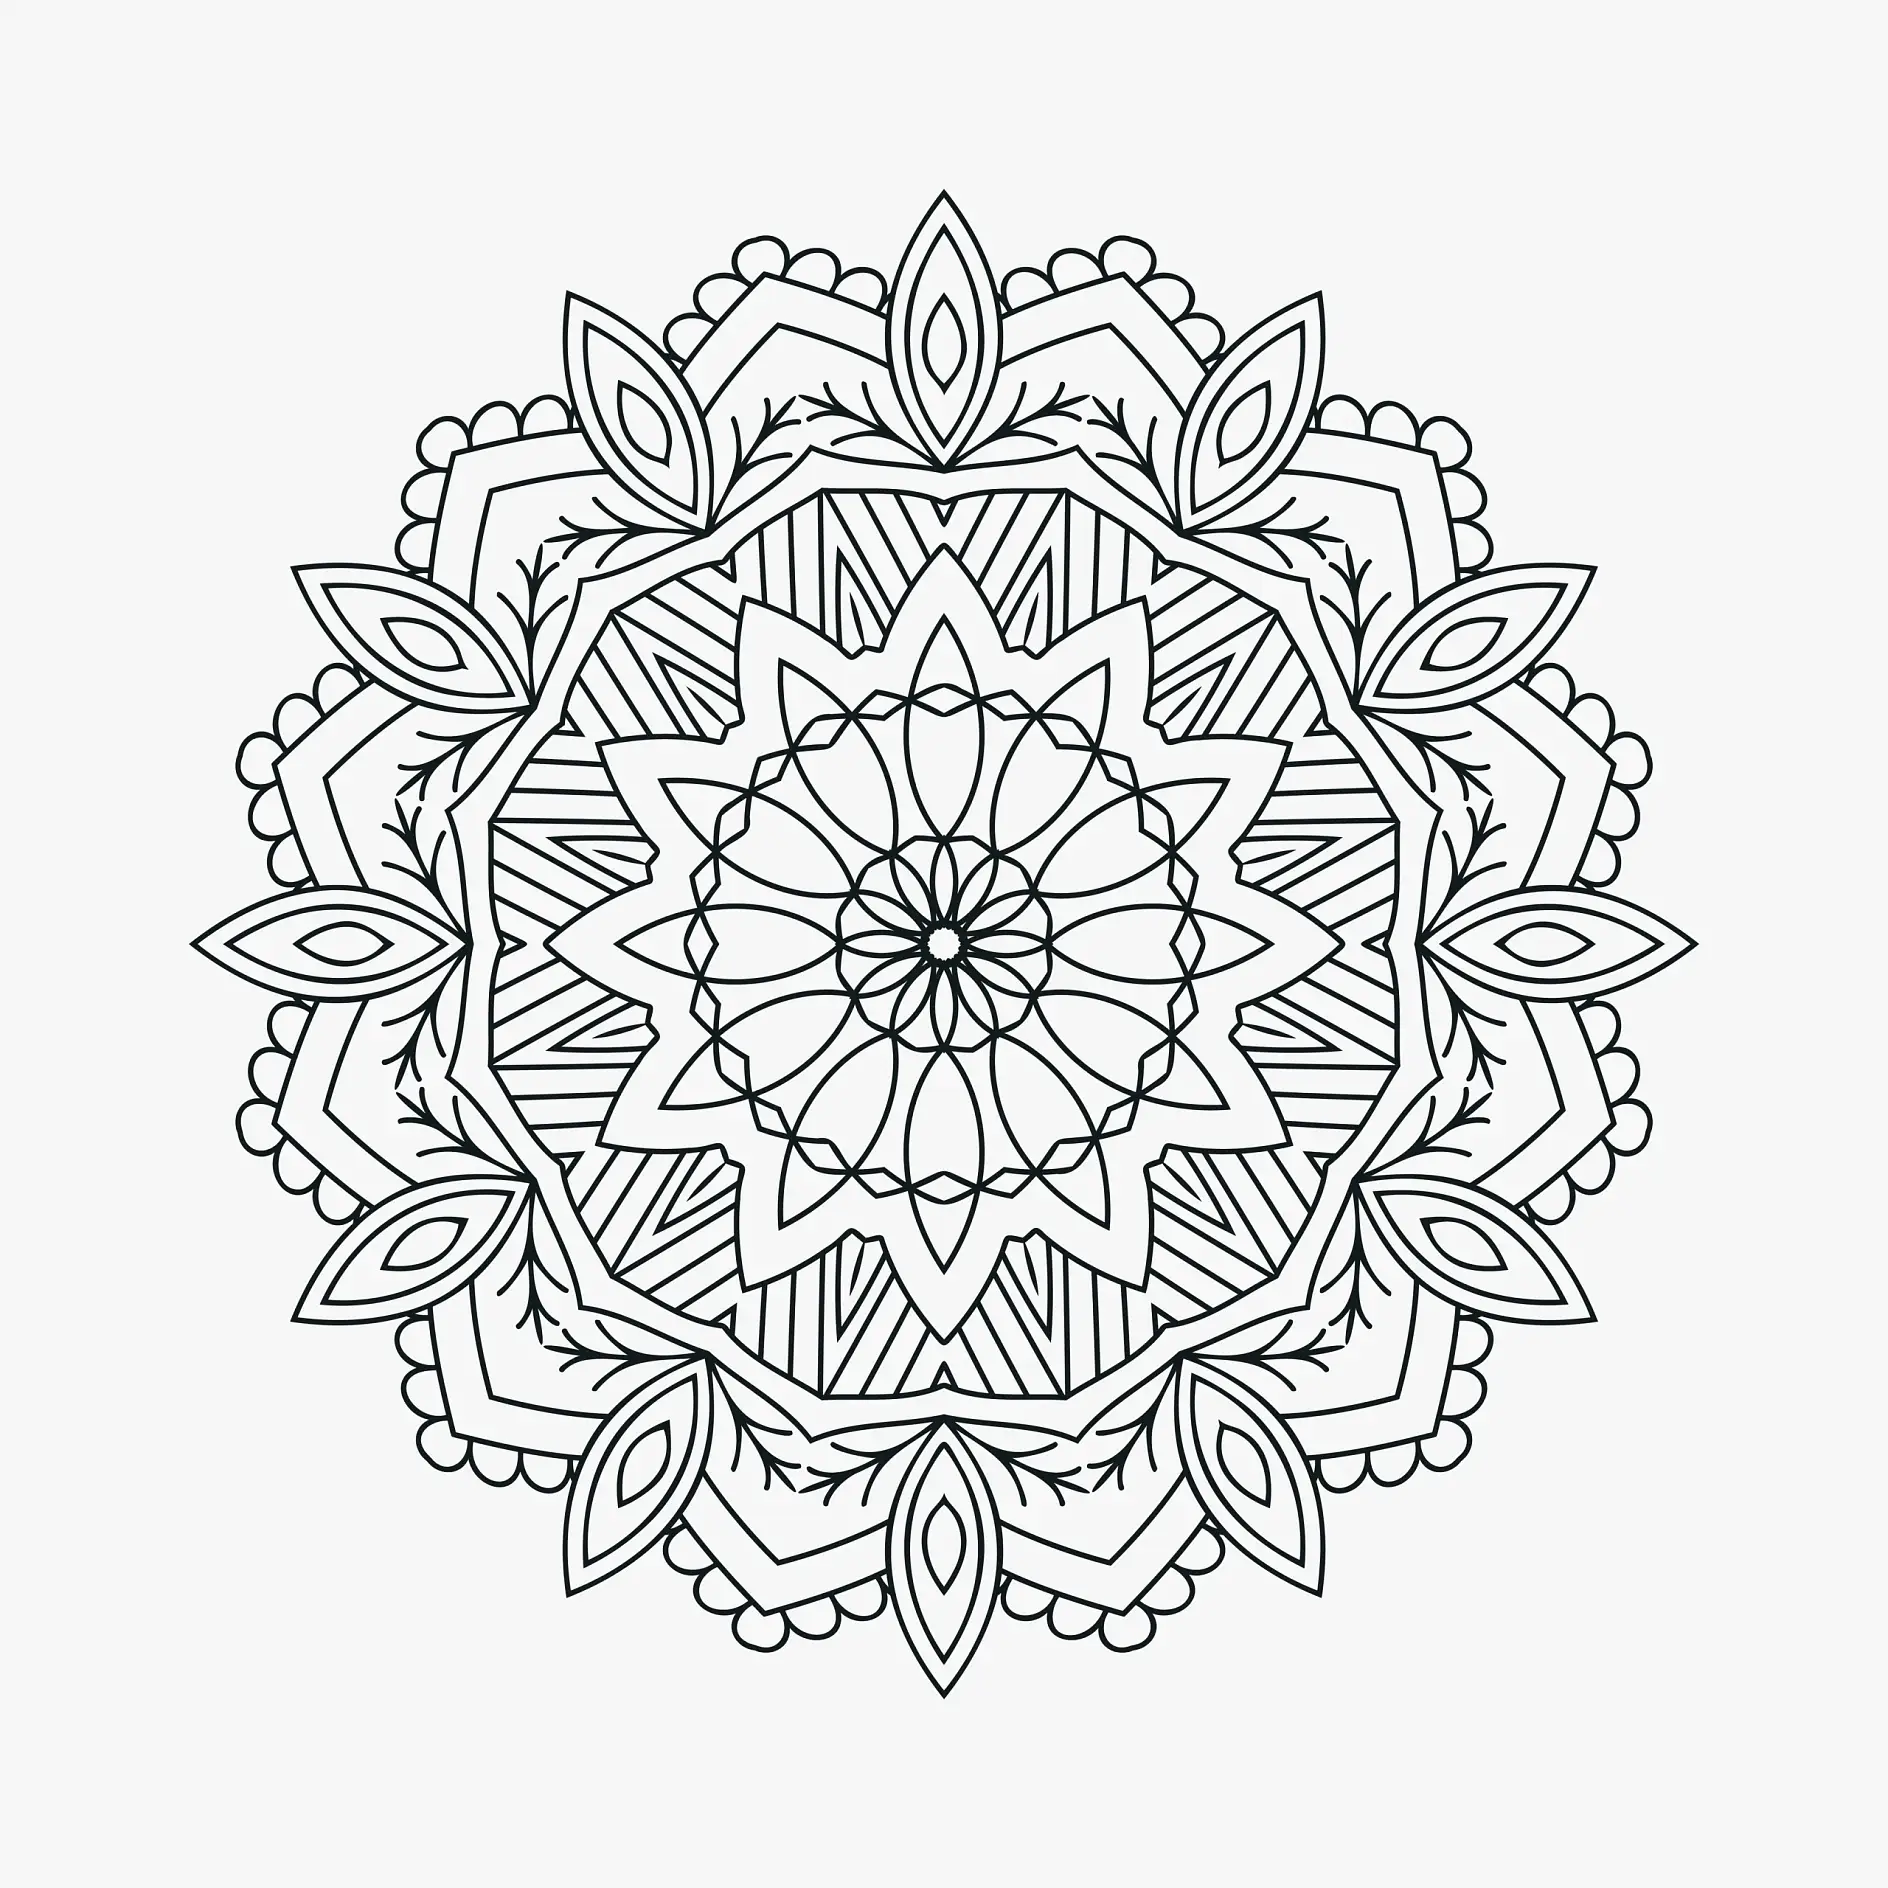 Ausmalbild Mandala mit komplexem Blätterdesign